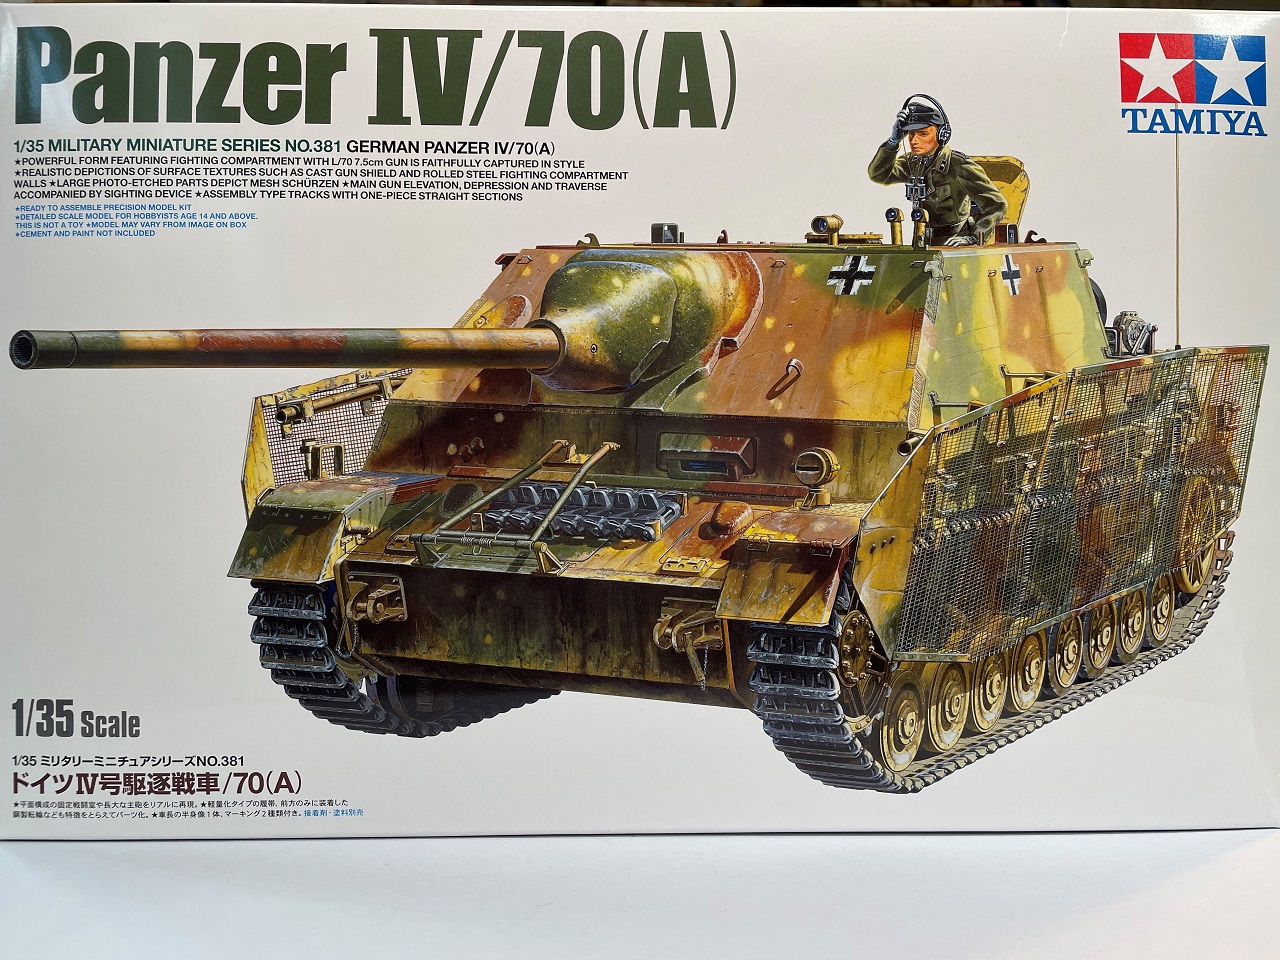 Panzer IV/70(A)  IPMS/USA Reviews